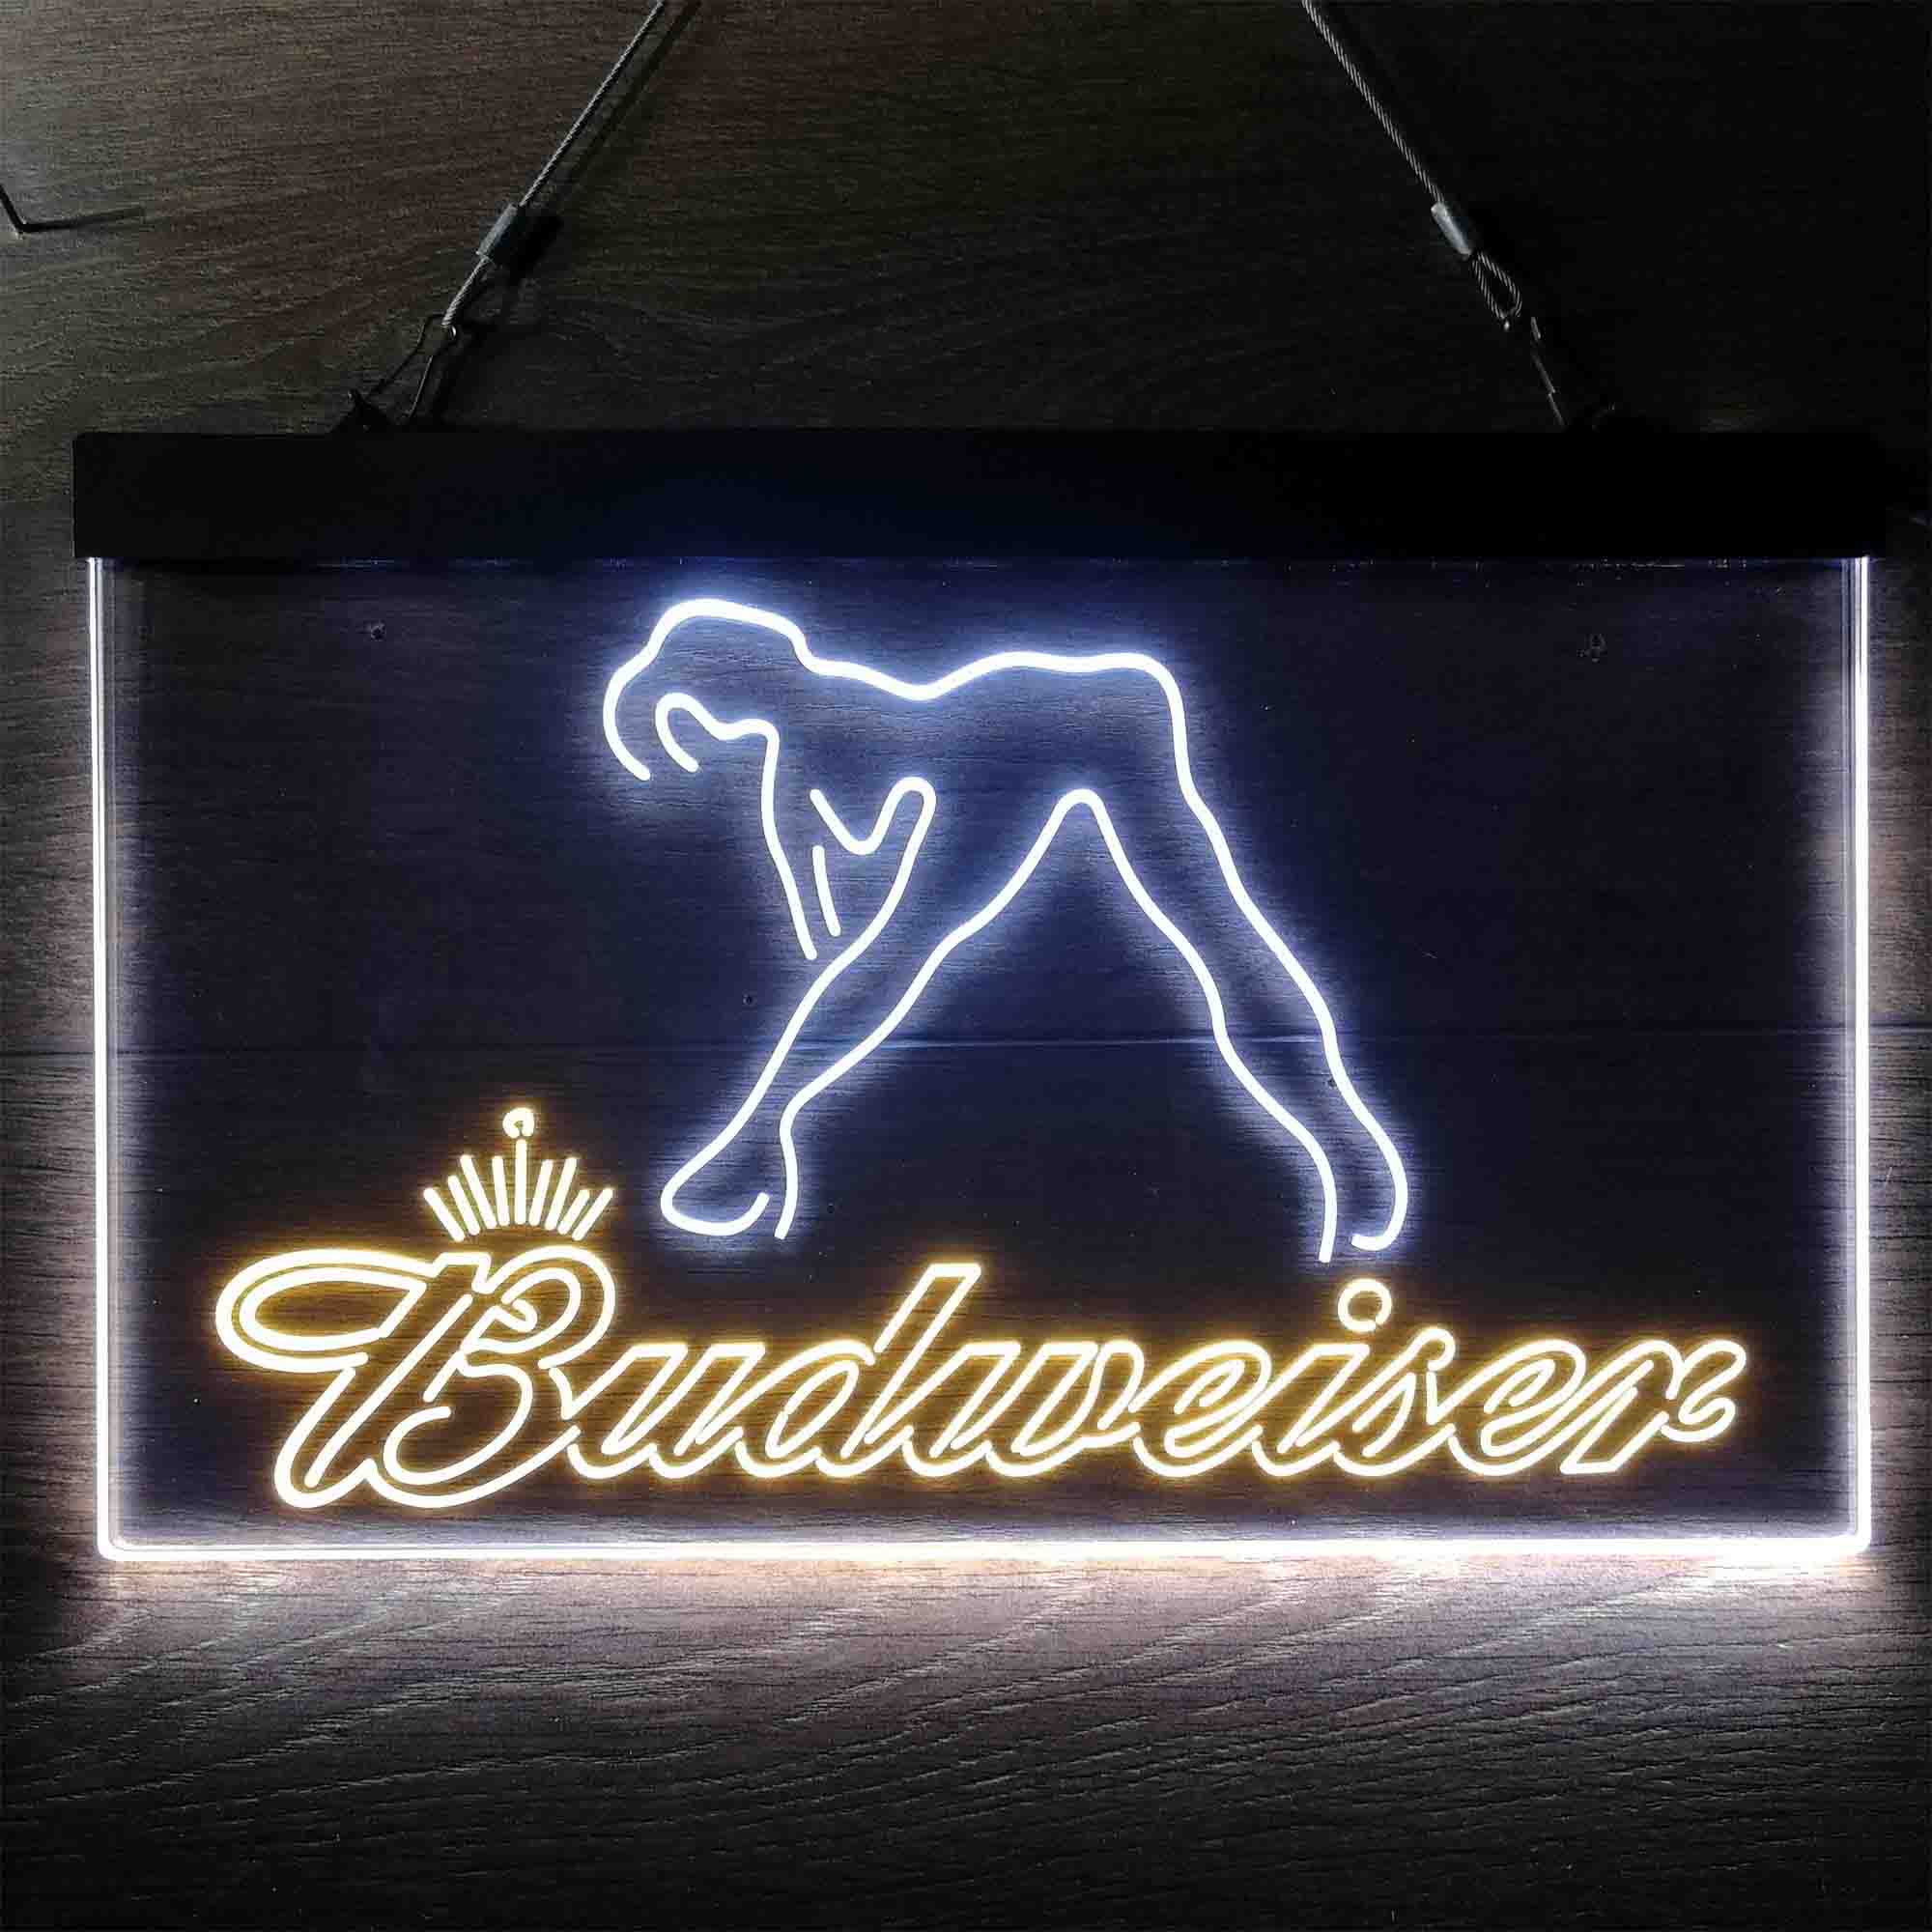 Budweiser Exotic Dancer Stripper Bar LED Neon Sign